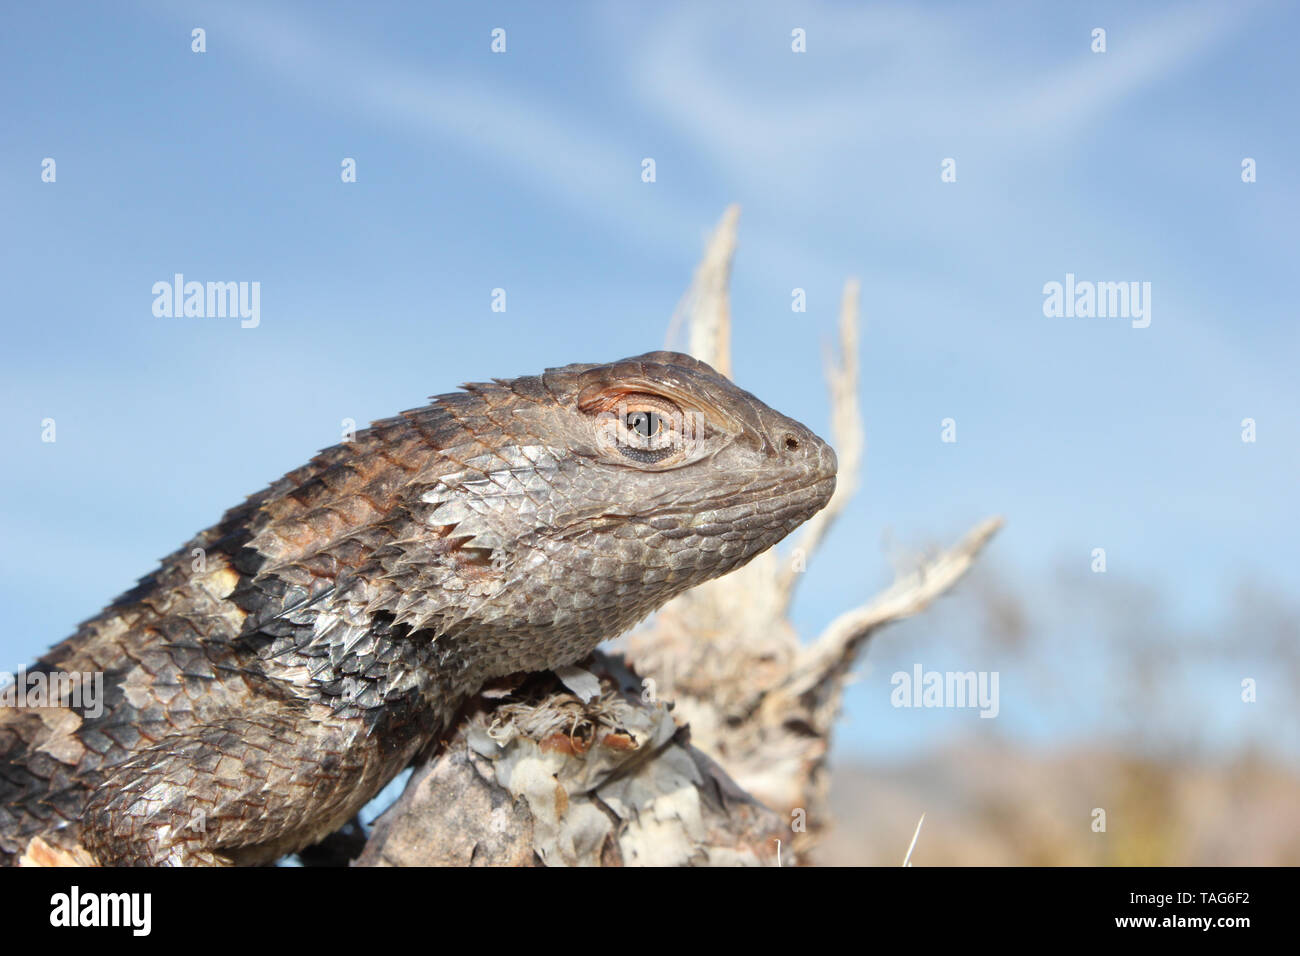 Adult Desert Spiny Lizard (Sceloporus magister) Stock Photo